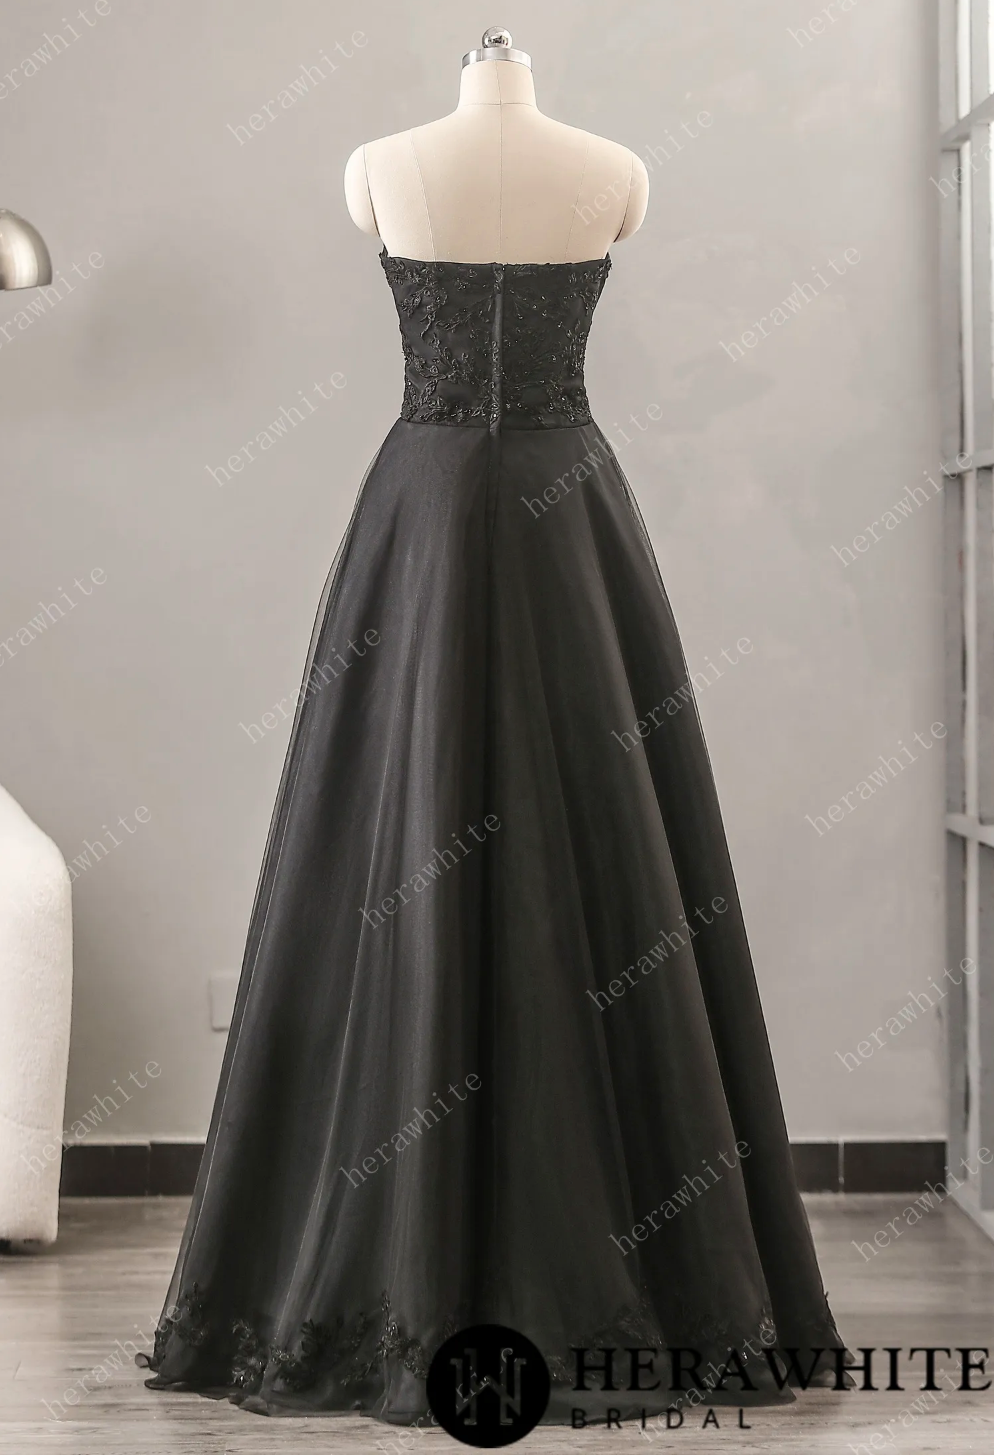 Black Strapless Wedding Dress with Sweetheart Neckline